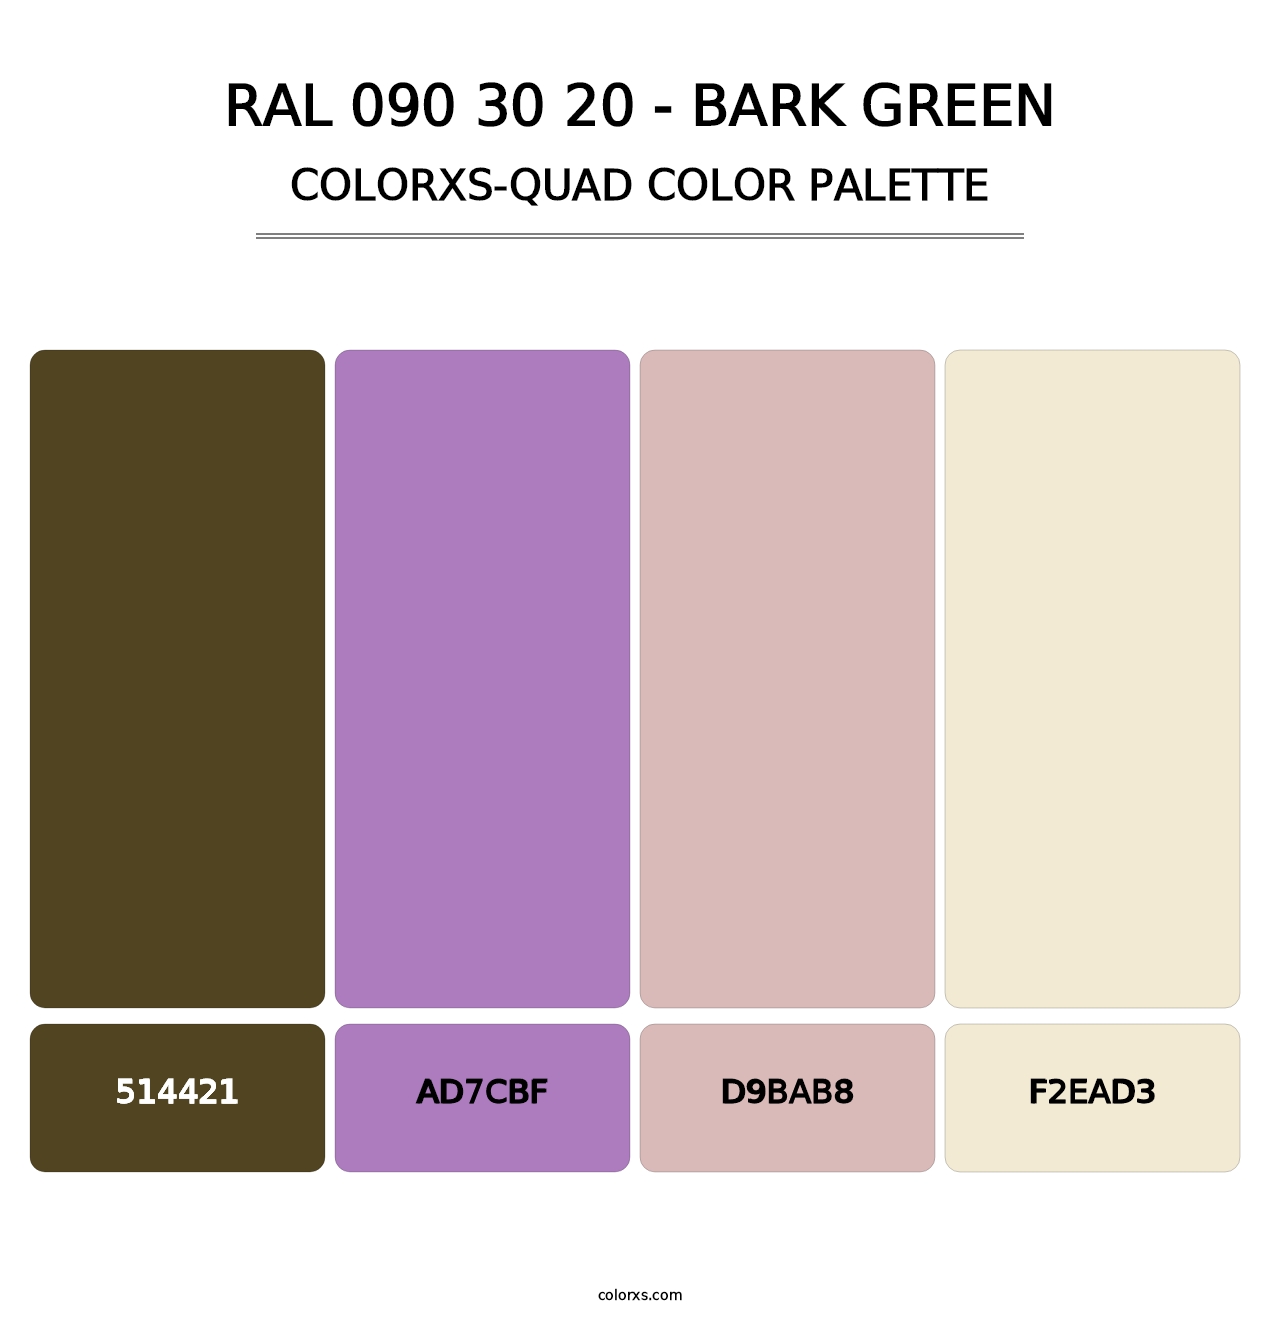 RAL 090 30 20 - Bark Green - Colorxs Quad Palette